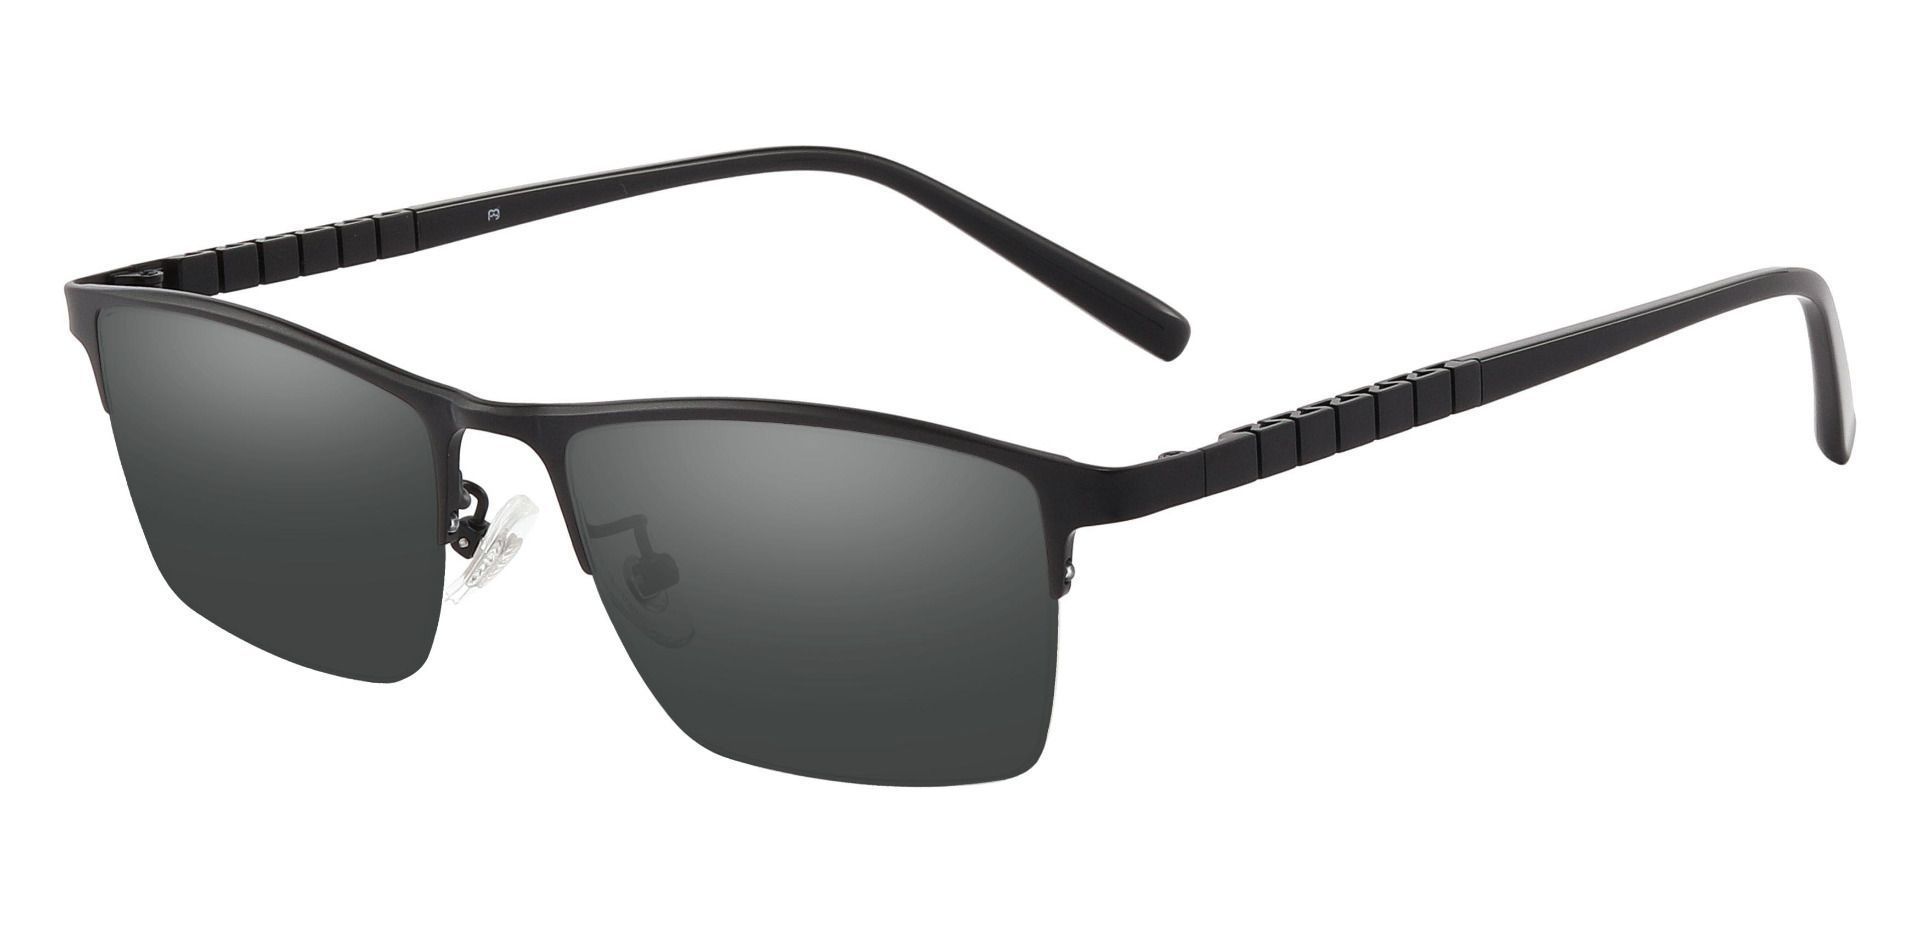 Maine Rectangle Prescription Sunglasses - Black Frame With Gray Lenses